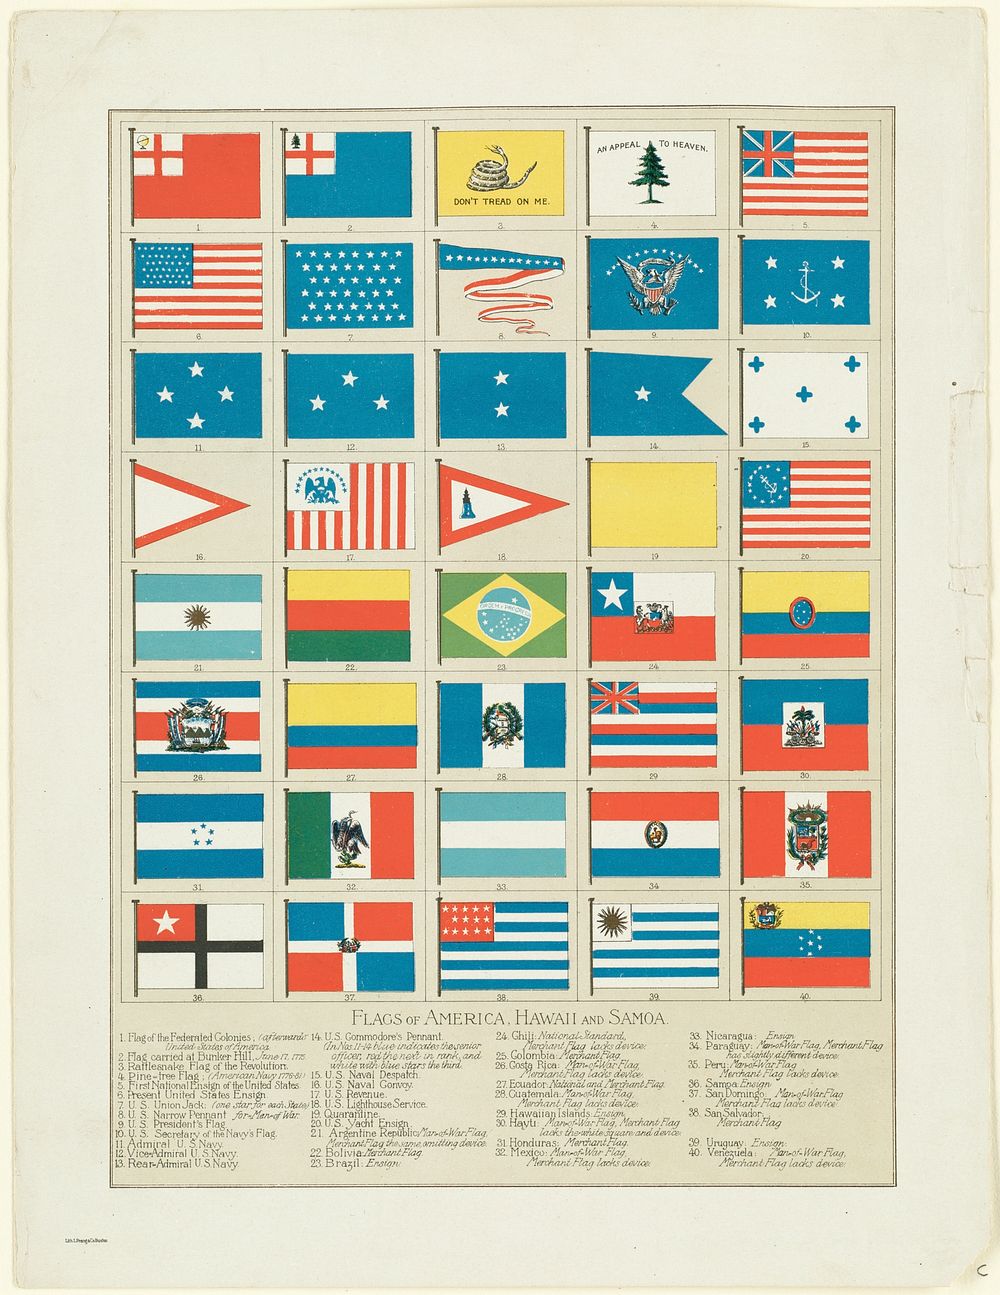             Flags of America, Hawaii and Samoa          